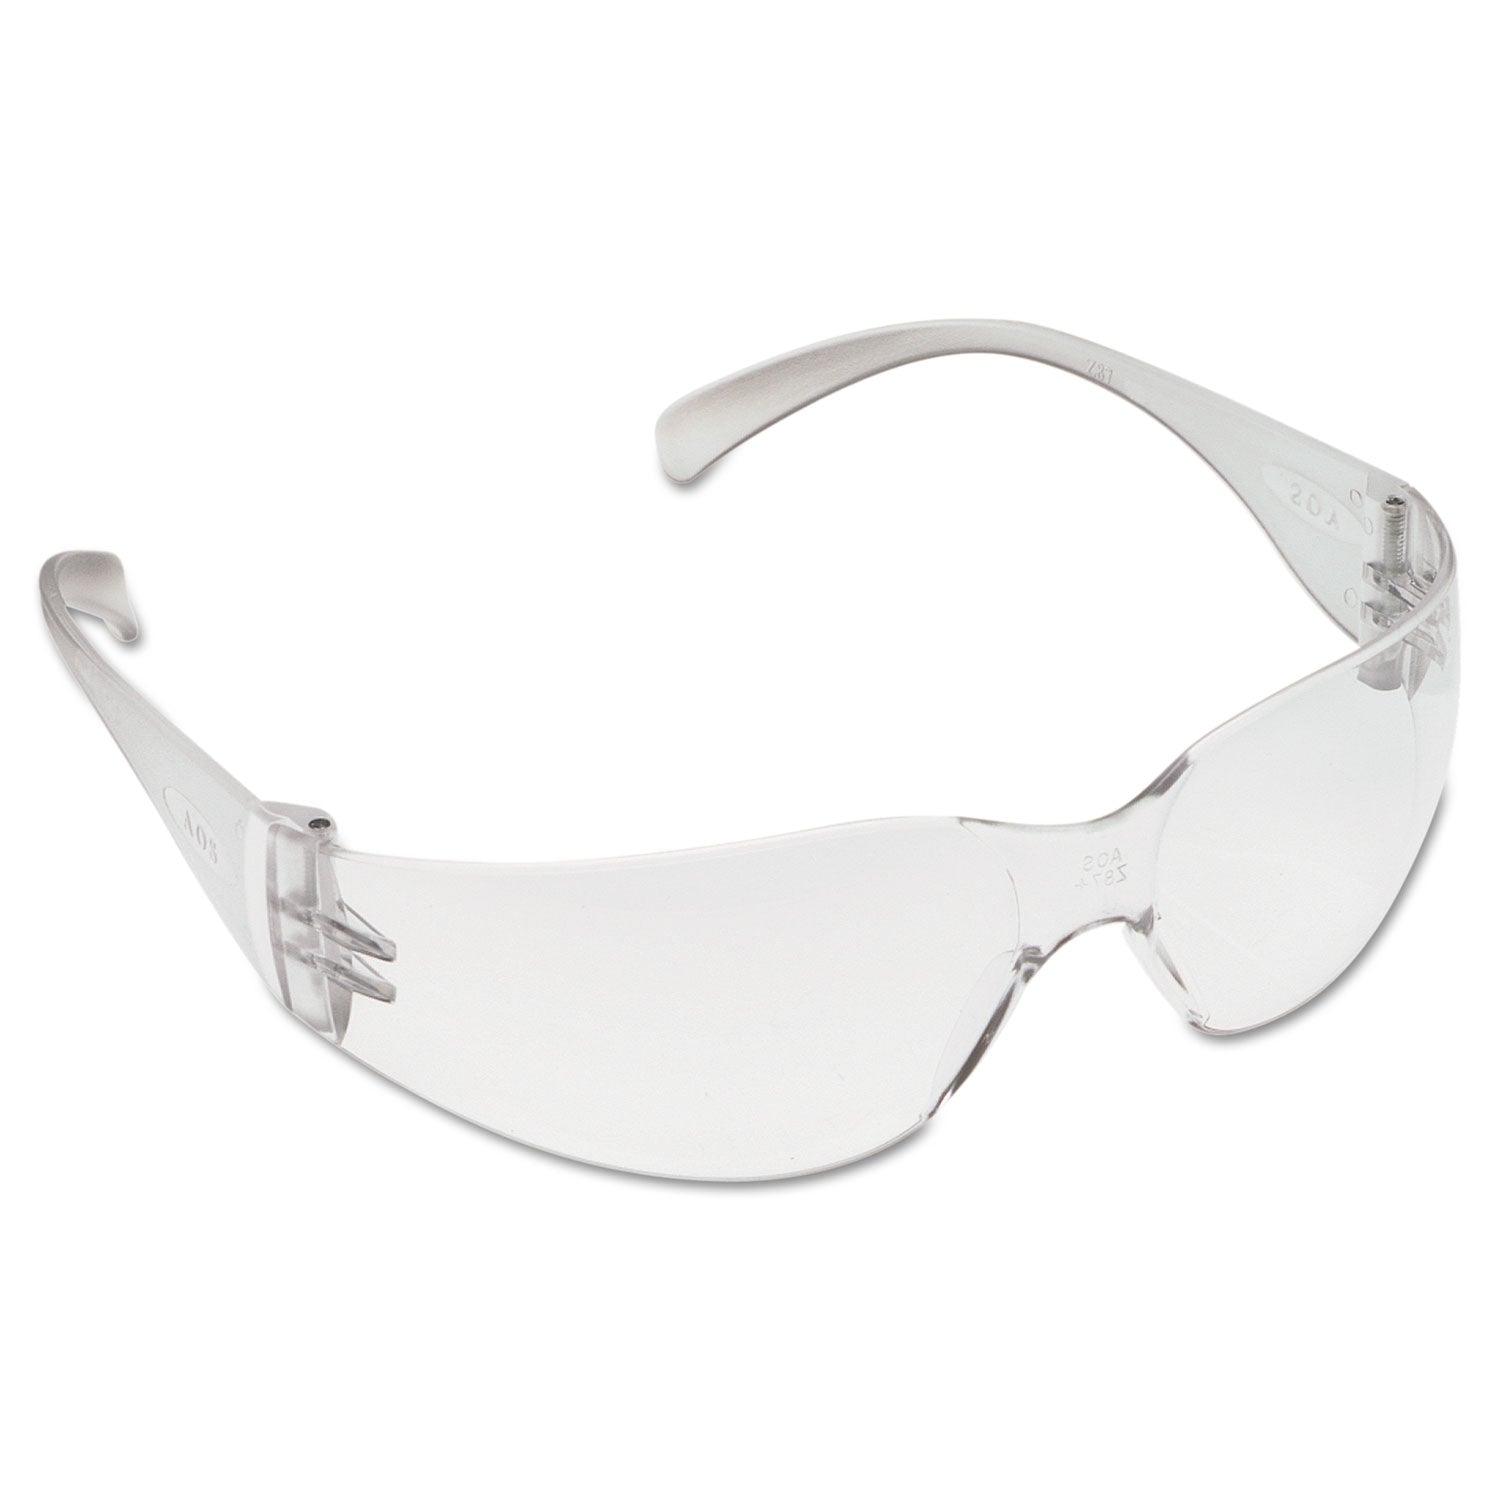 virtua-protective-eyewear-clear-frame-clear-lens-hard-coat_mmm1132600002ea - 1